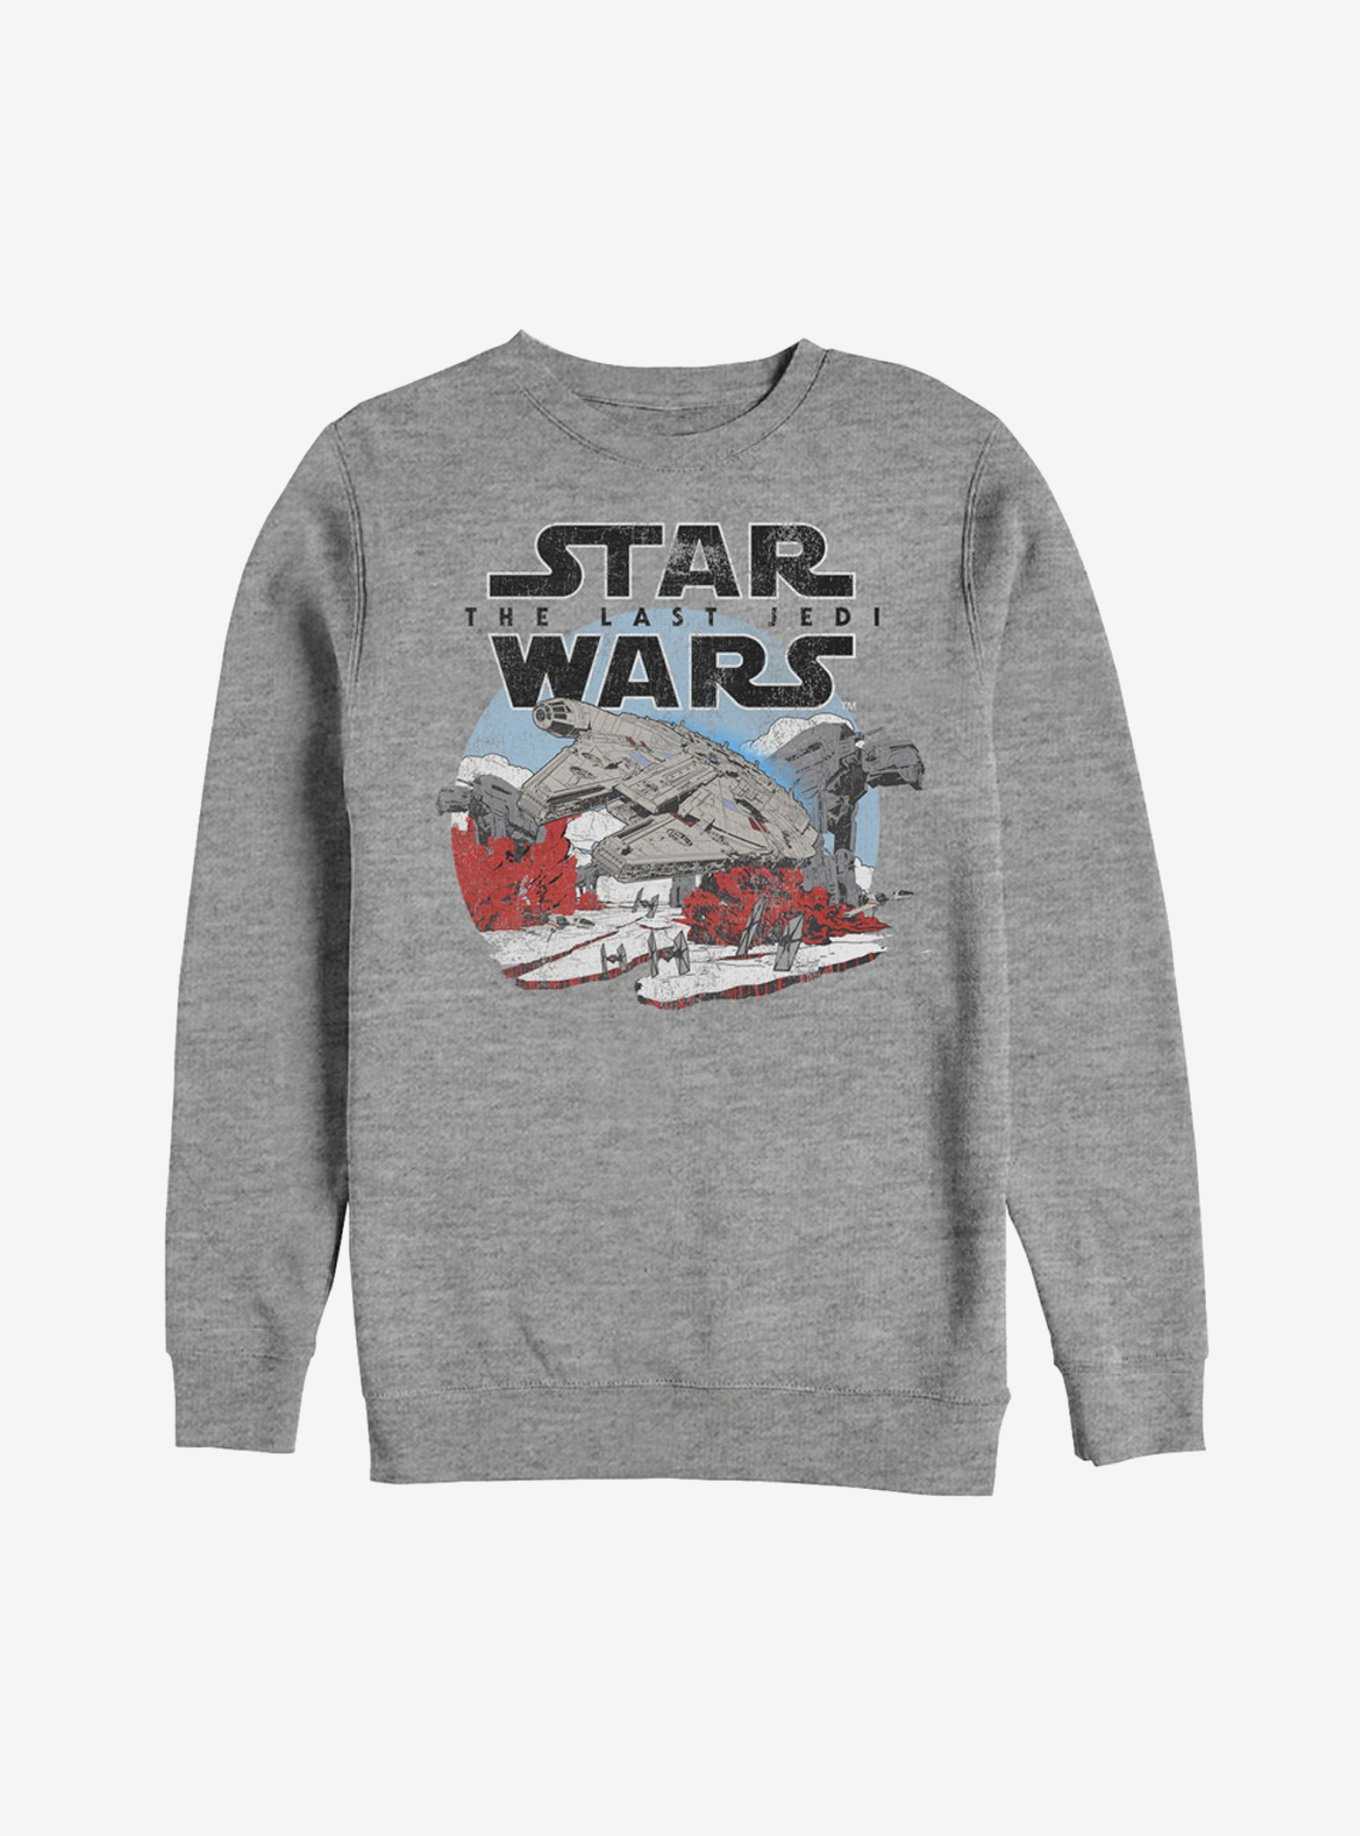 Star Wars Millennium Falcon Crait Battle Sweatshirt, , hi-res